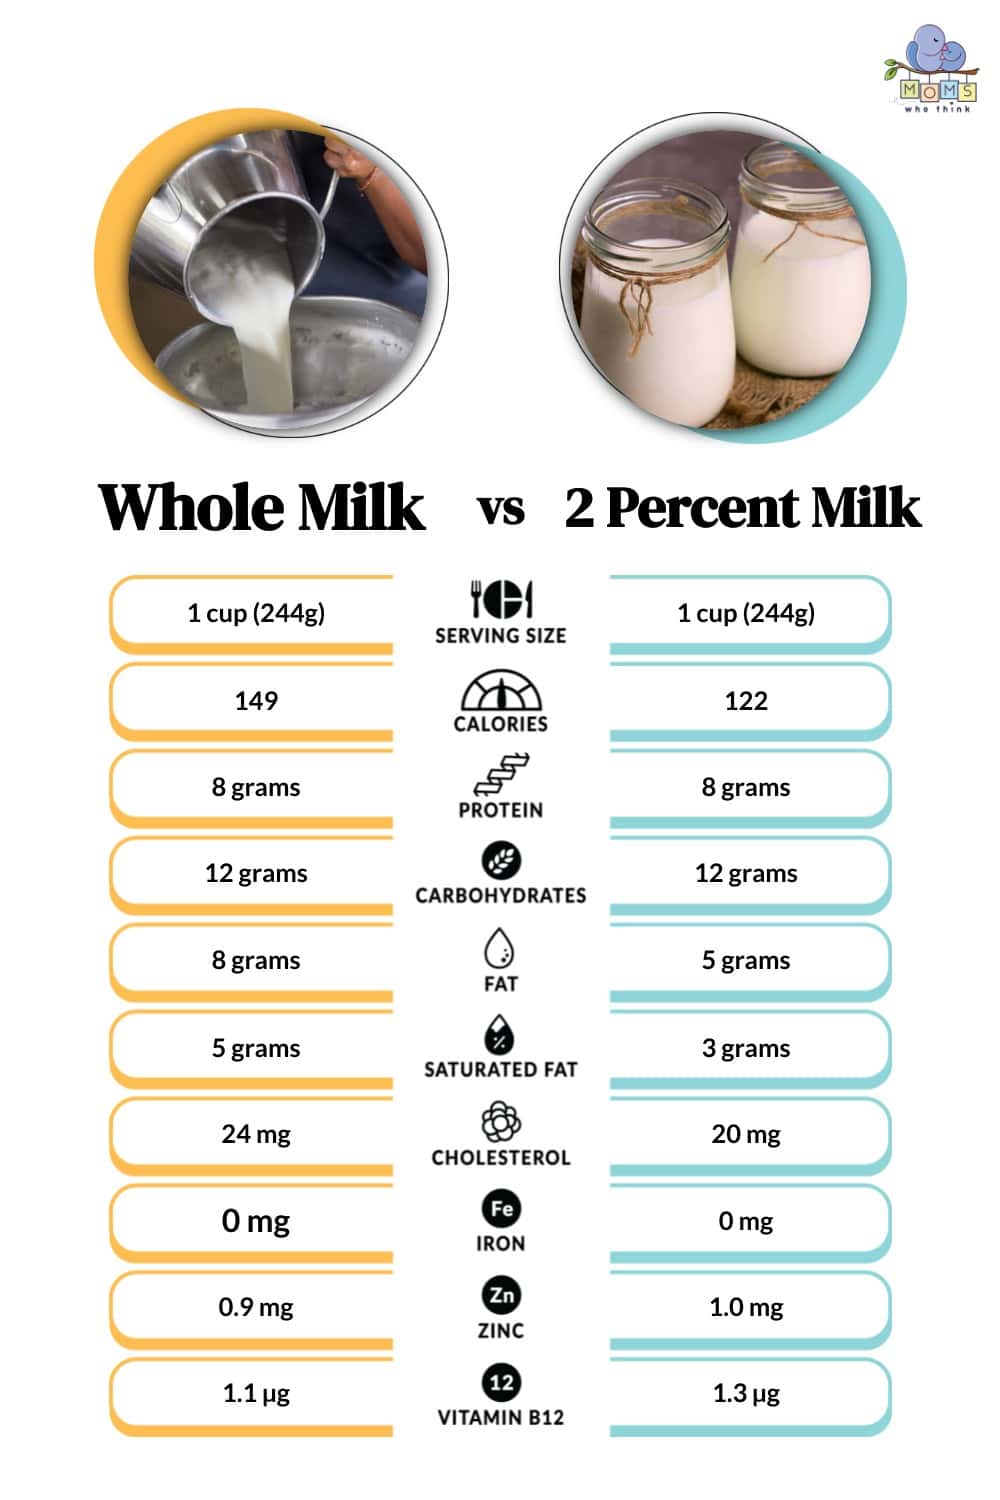 Whole Milk vs 2 Percent Milk